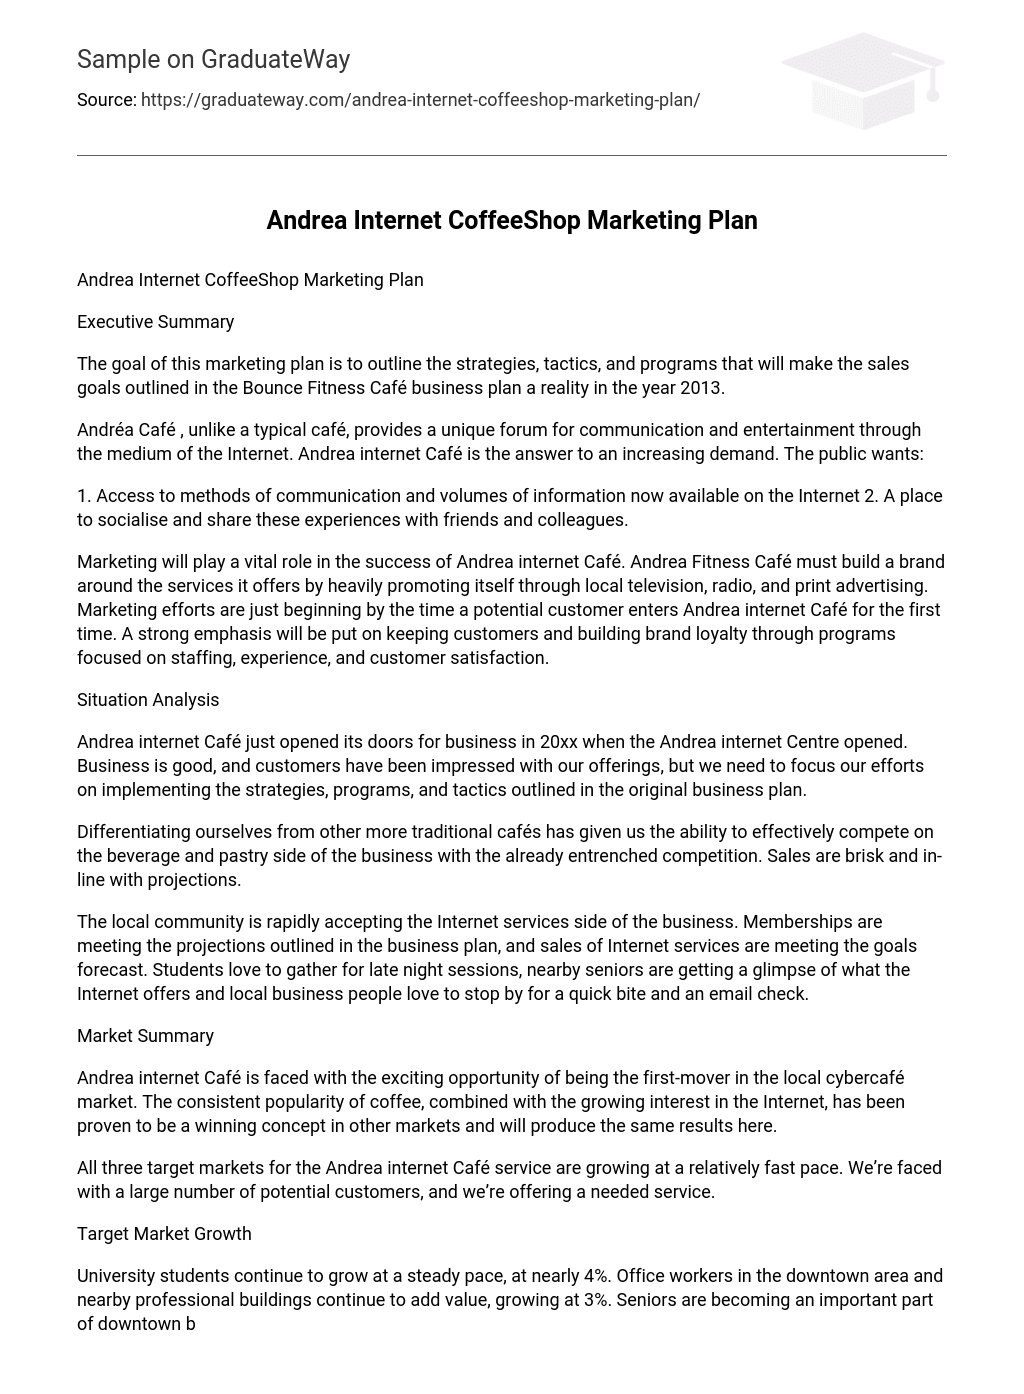 Andrea Internet CoffeeShop Marketing Plan